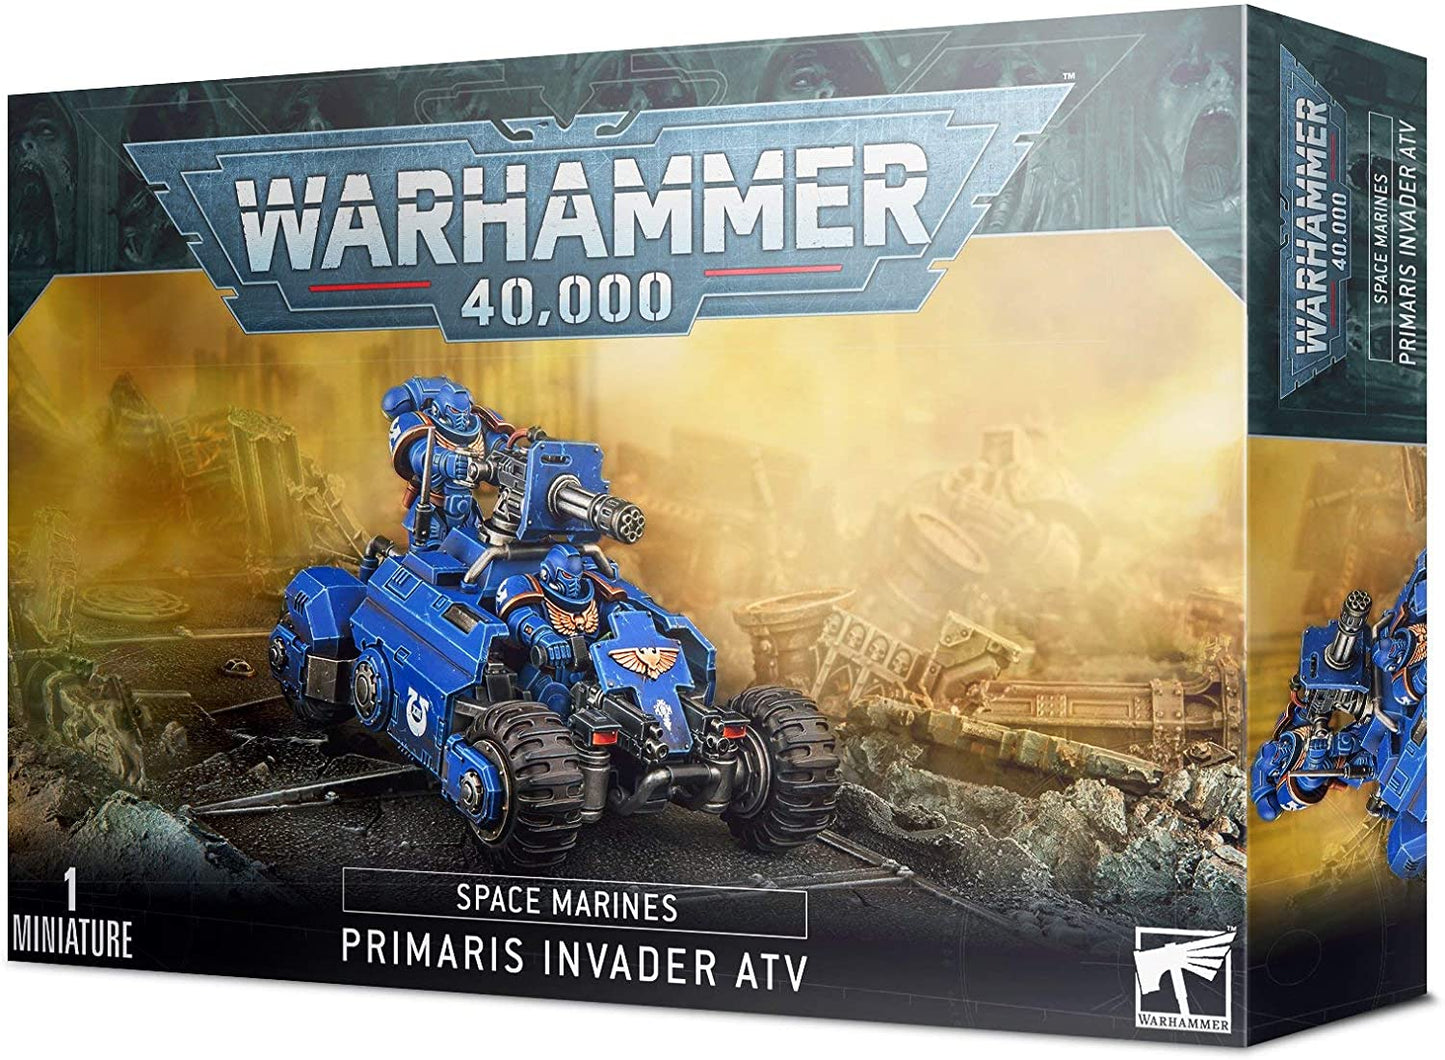 Warhammer 40,000: Space Marines Primaris Invader ATV